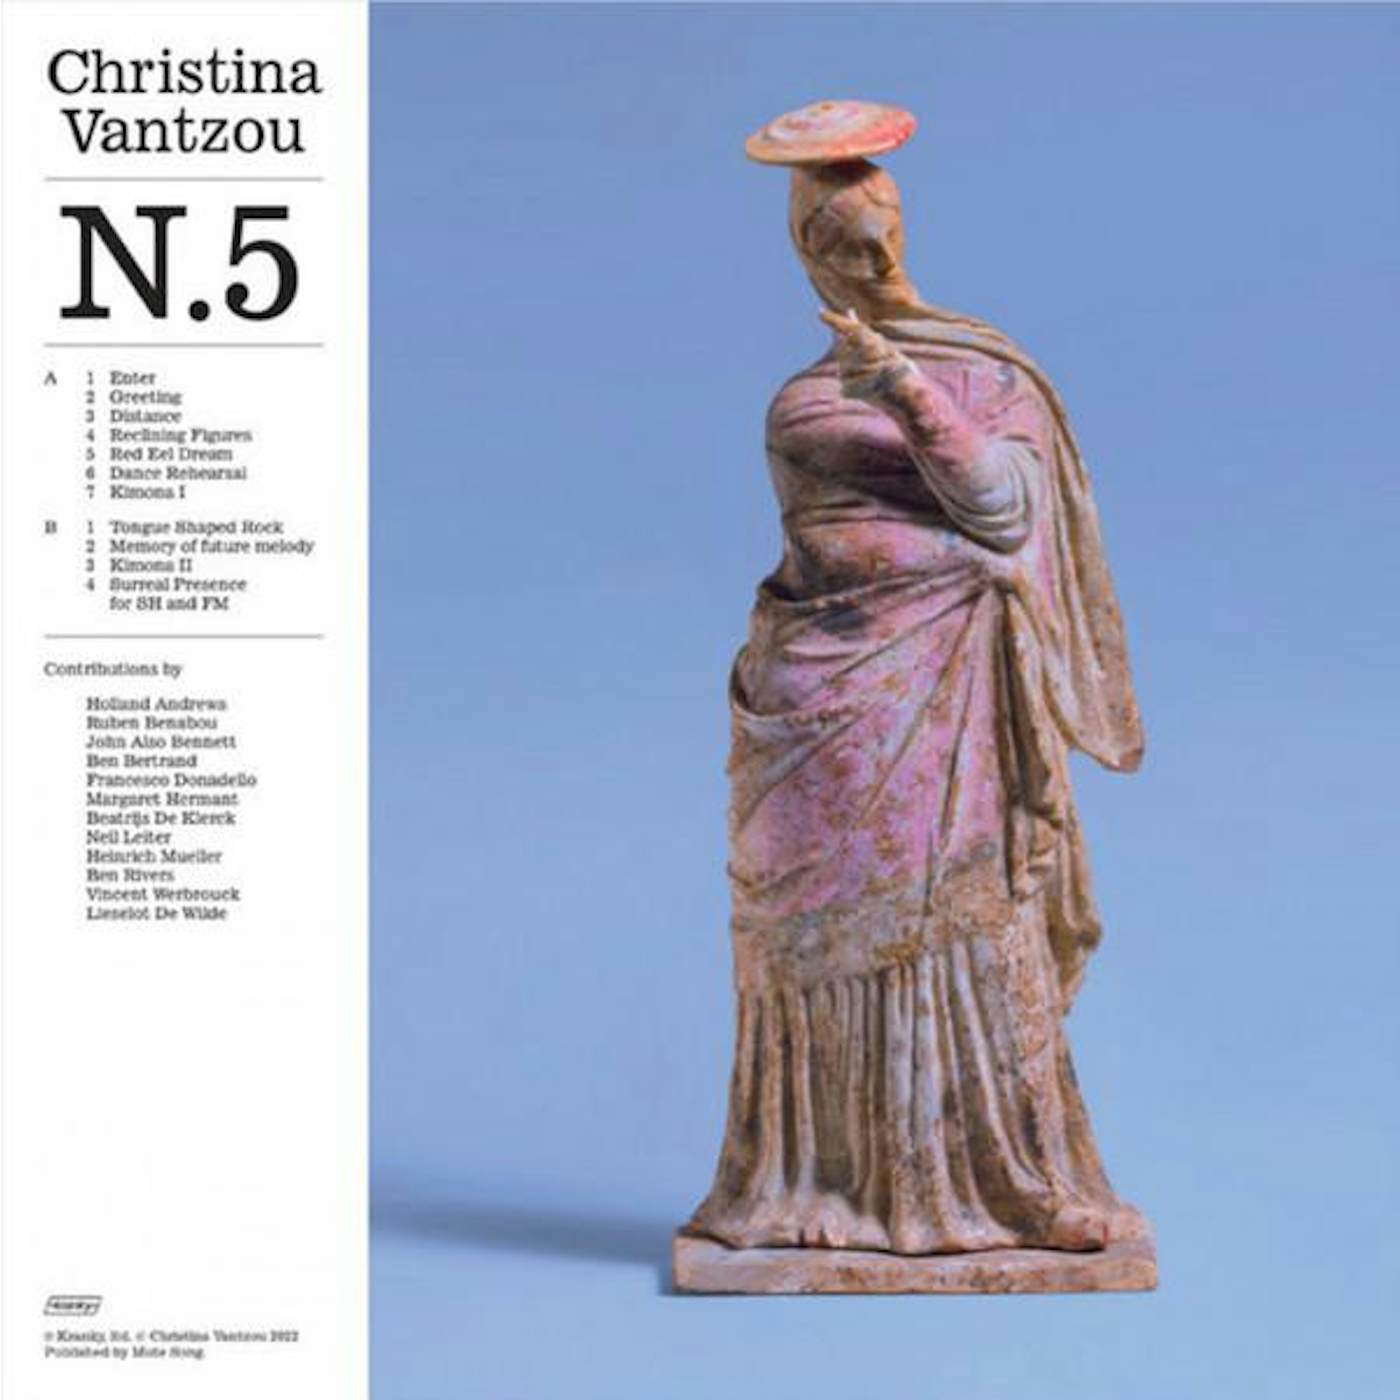 Christina Vantzou NO5 Vinyl Record